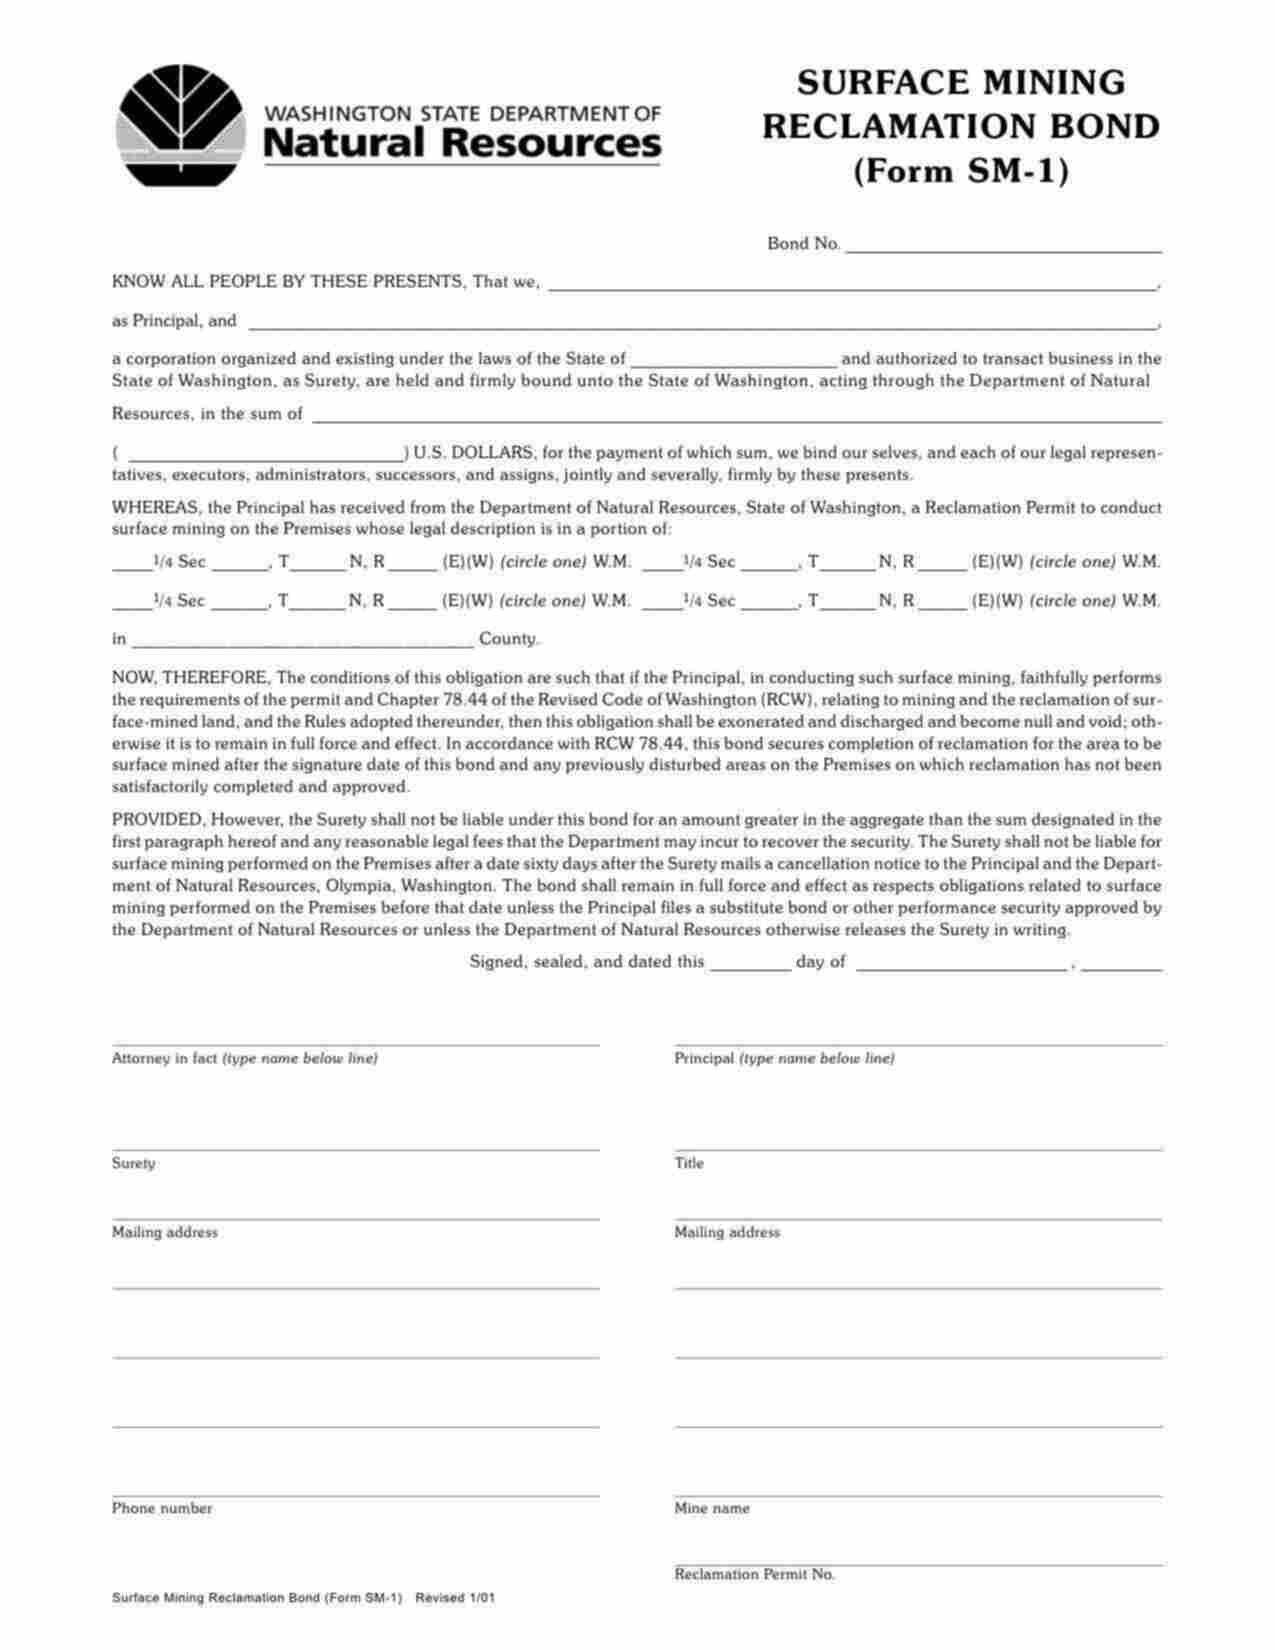 Washington Surface Mining Reclamation (Form SM-1) Bond Form